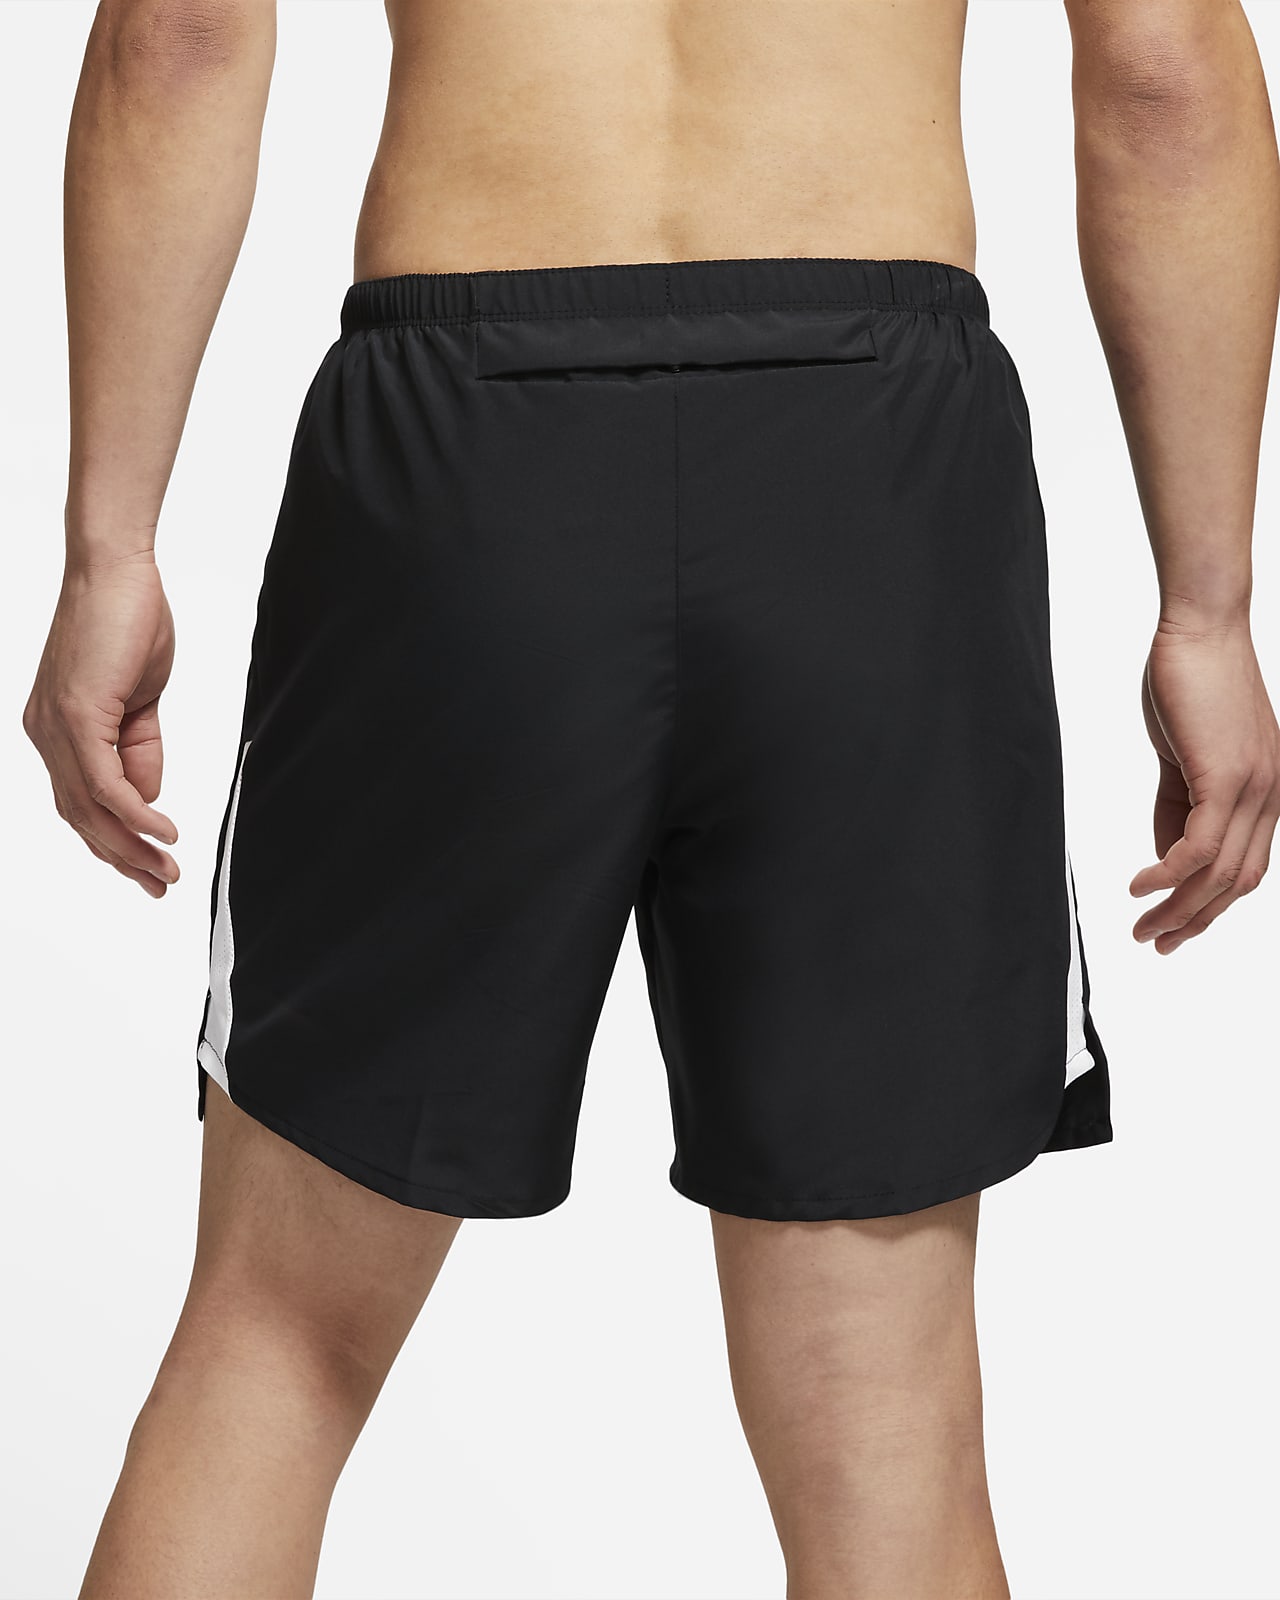 Brief-Lined Running Shorts. Nike JP